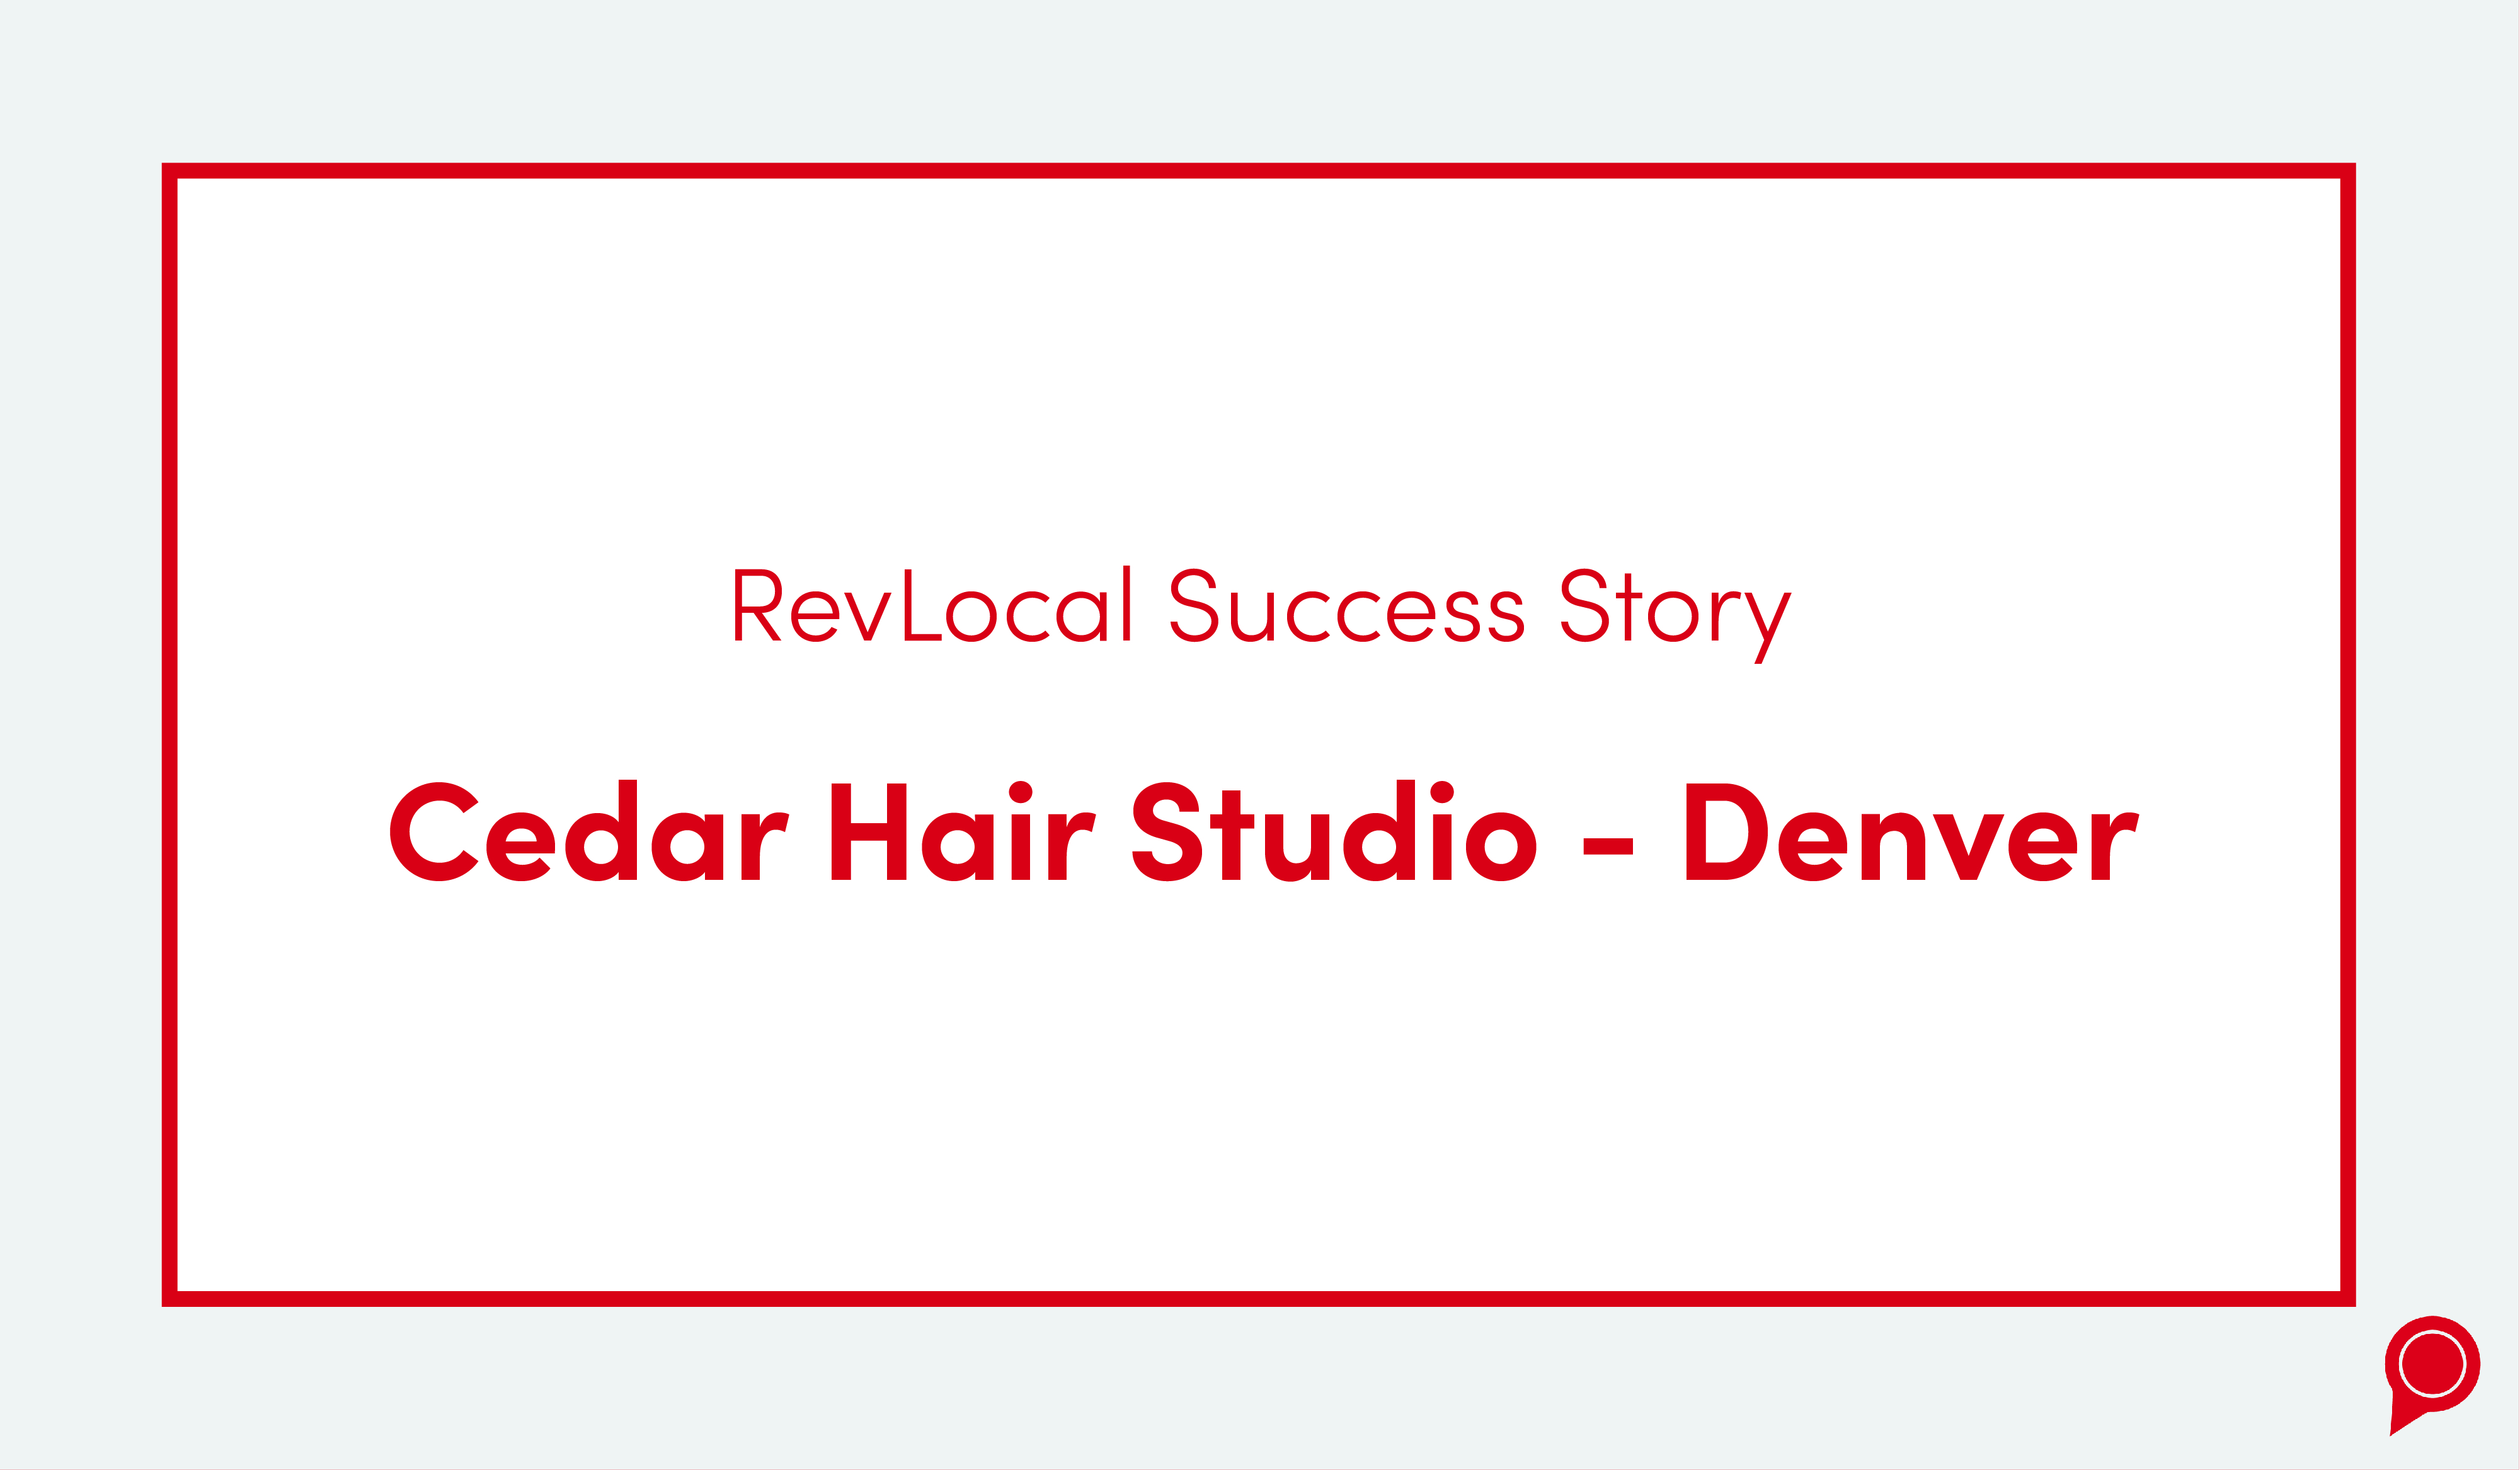 Cedar Hair Studio - Denver